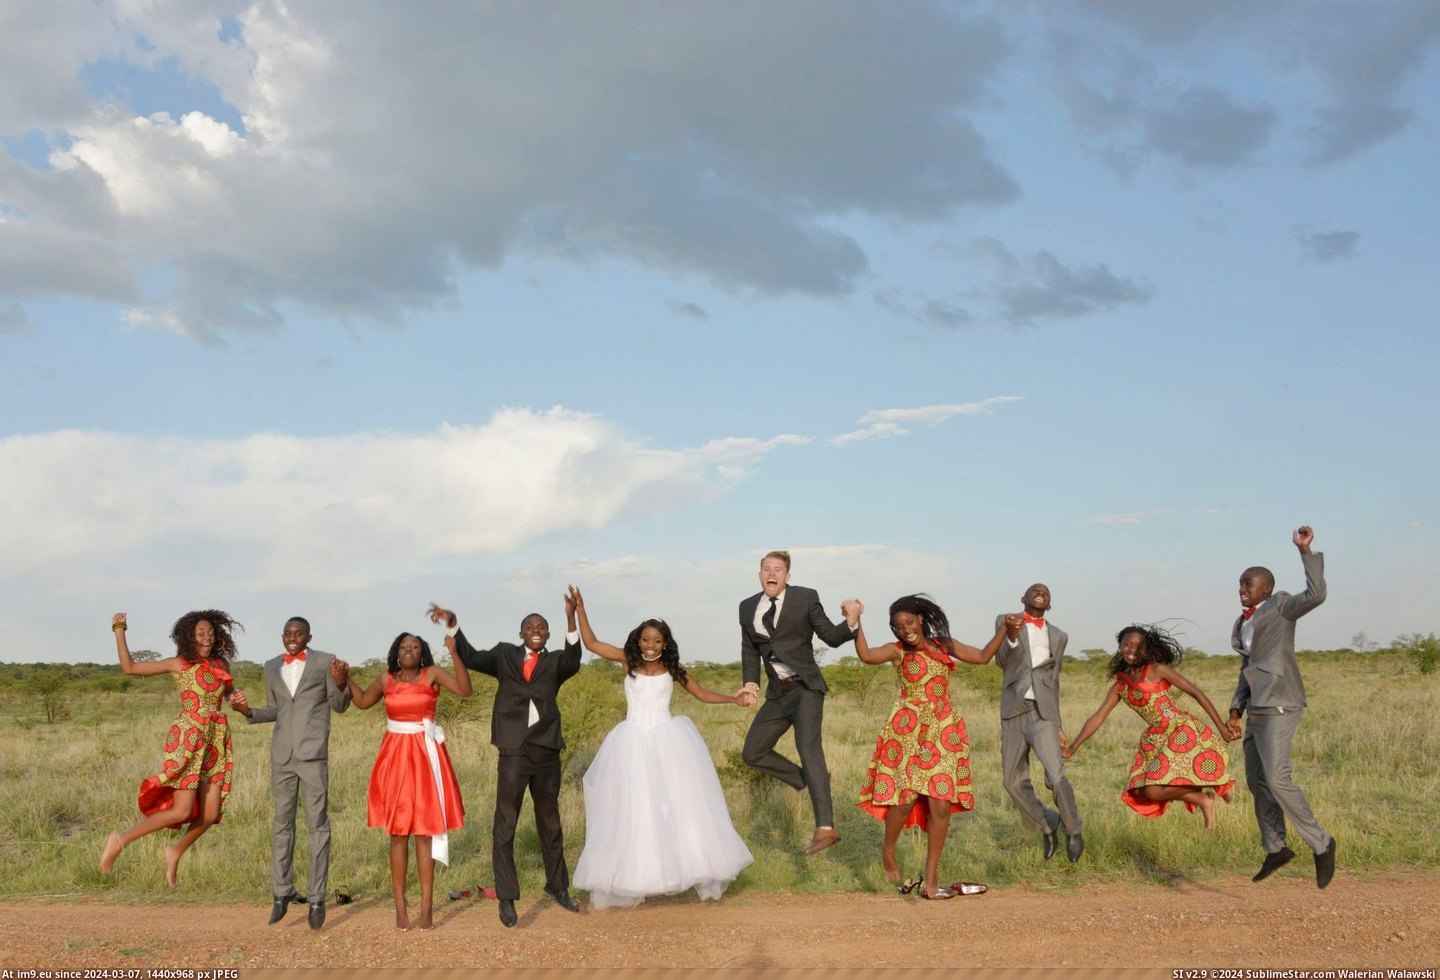 #Wife #She #Wedding #African #Zimbabwean #Had #Our [Pics] My wife and I just had our African Wedding (She's Zimbabwean) 1 Pic. (Bild von album My r/PICS favs))